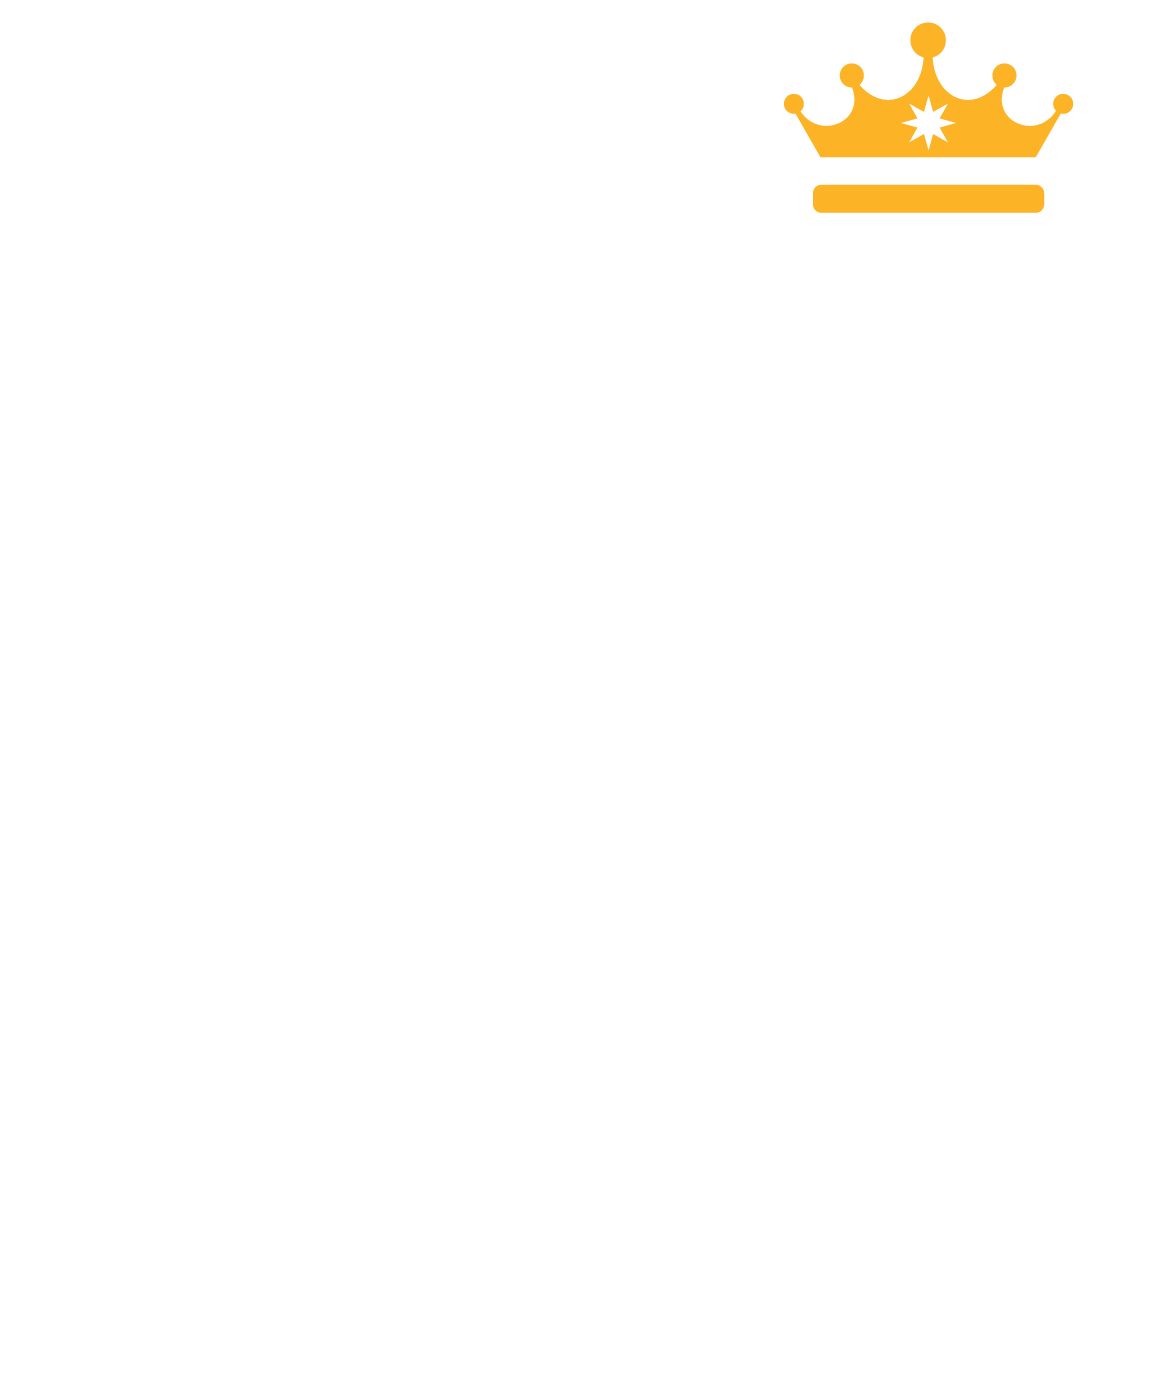 Catering Kings